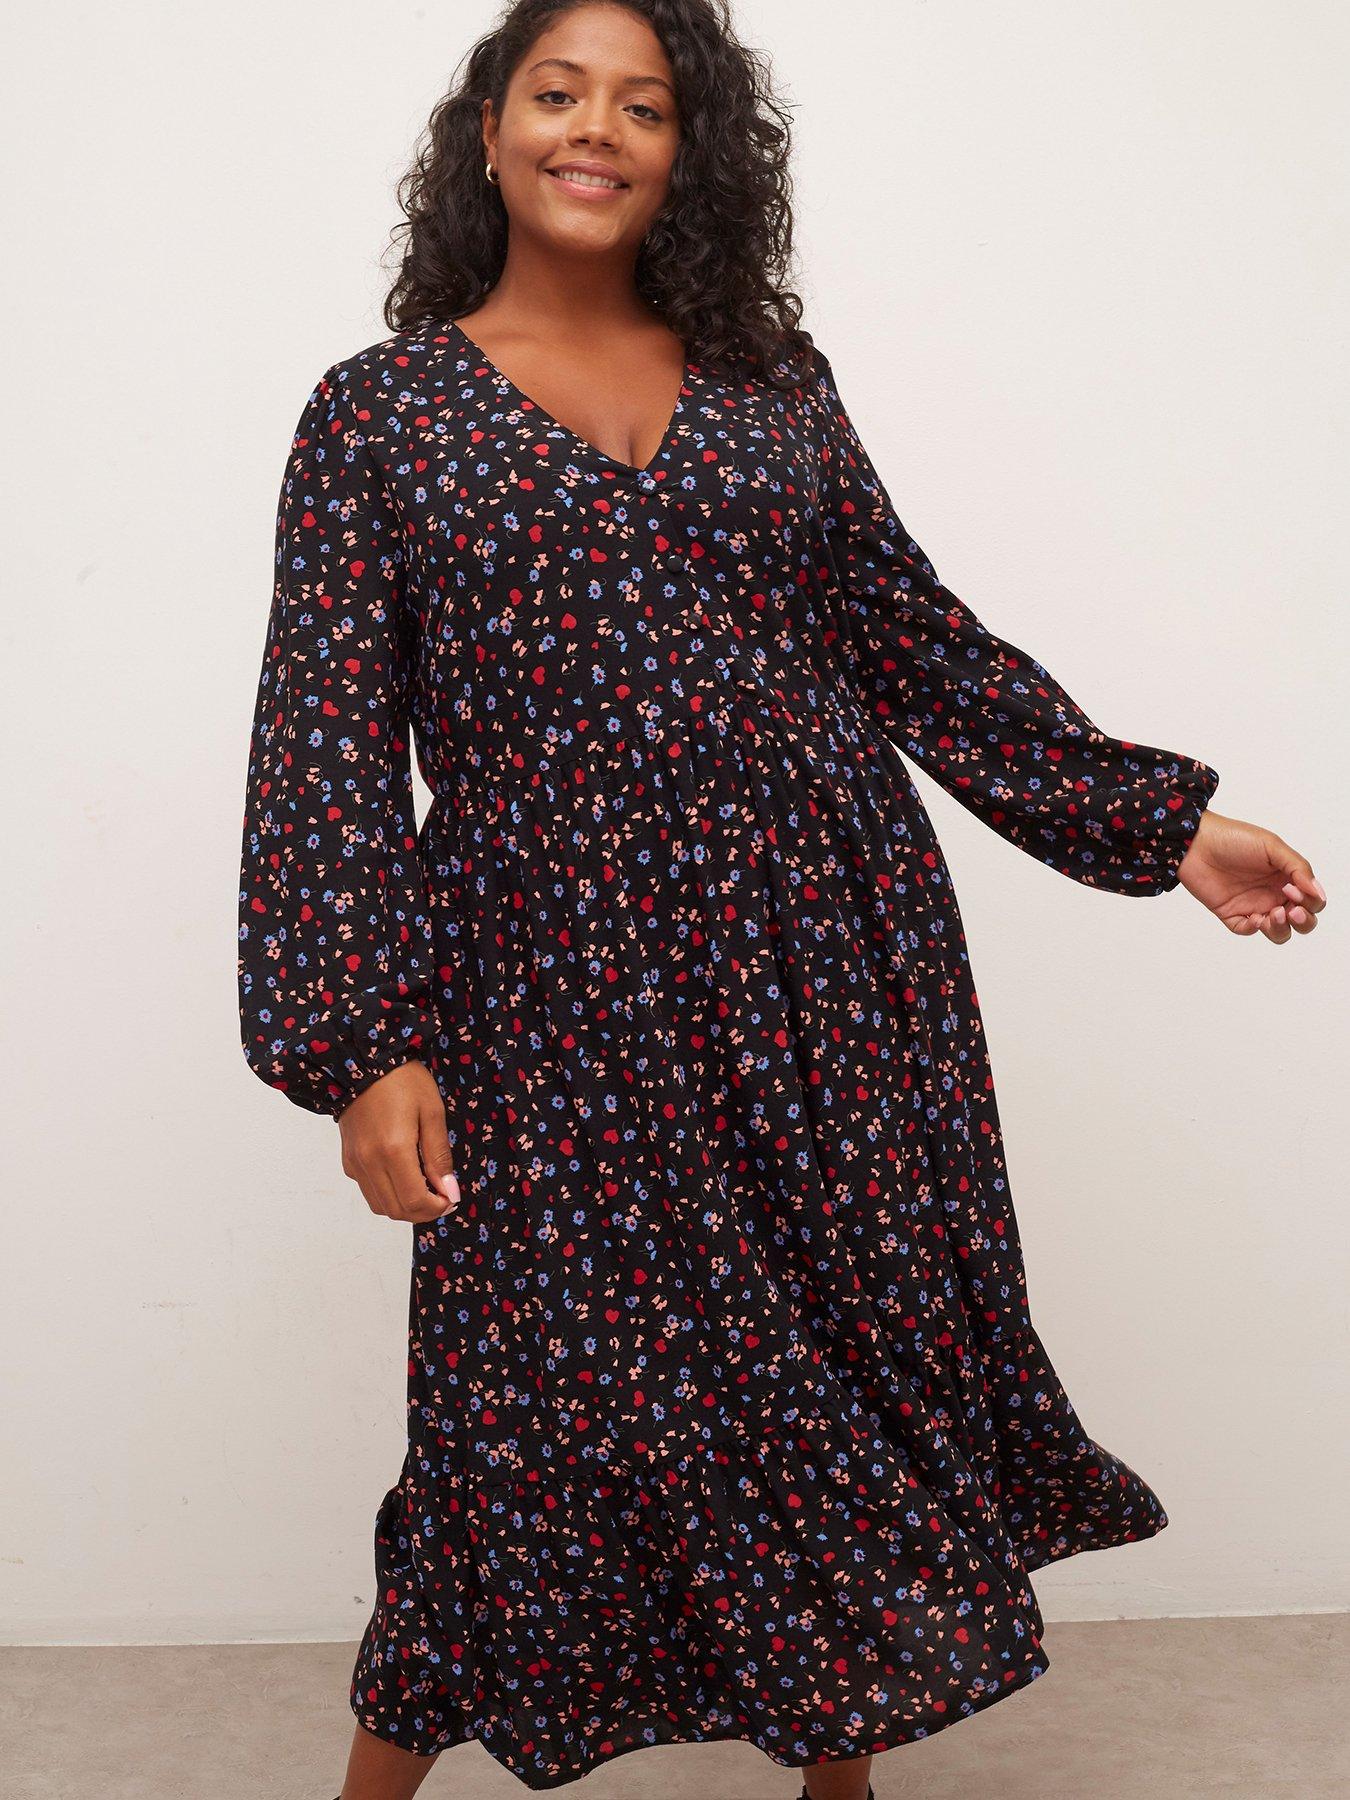 Women/'s Blouson Printed A-Line Dress Details about  / Style /& Co